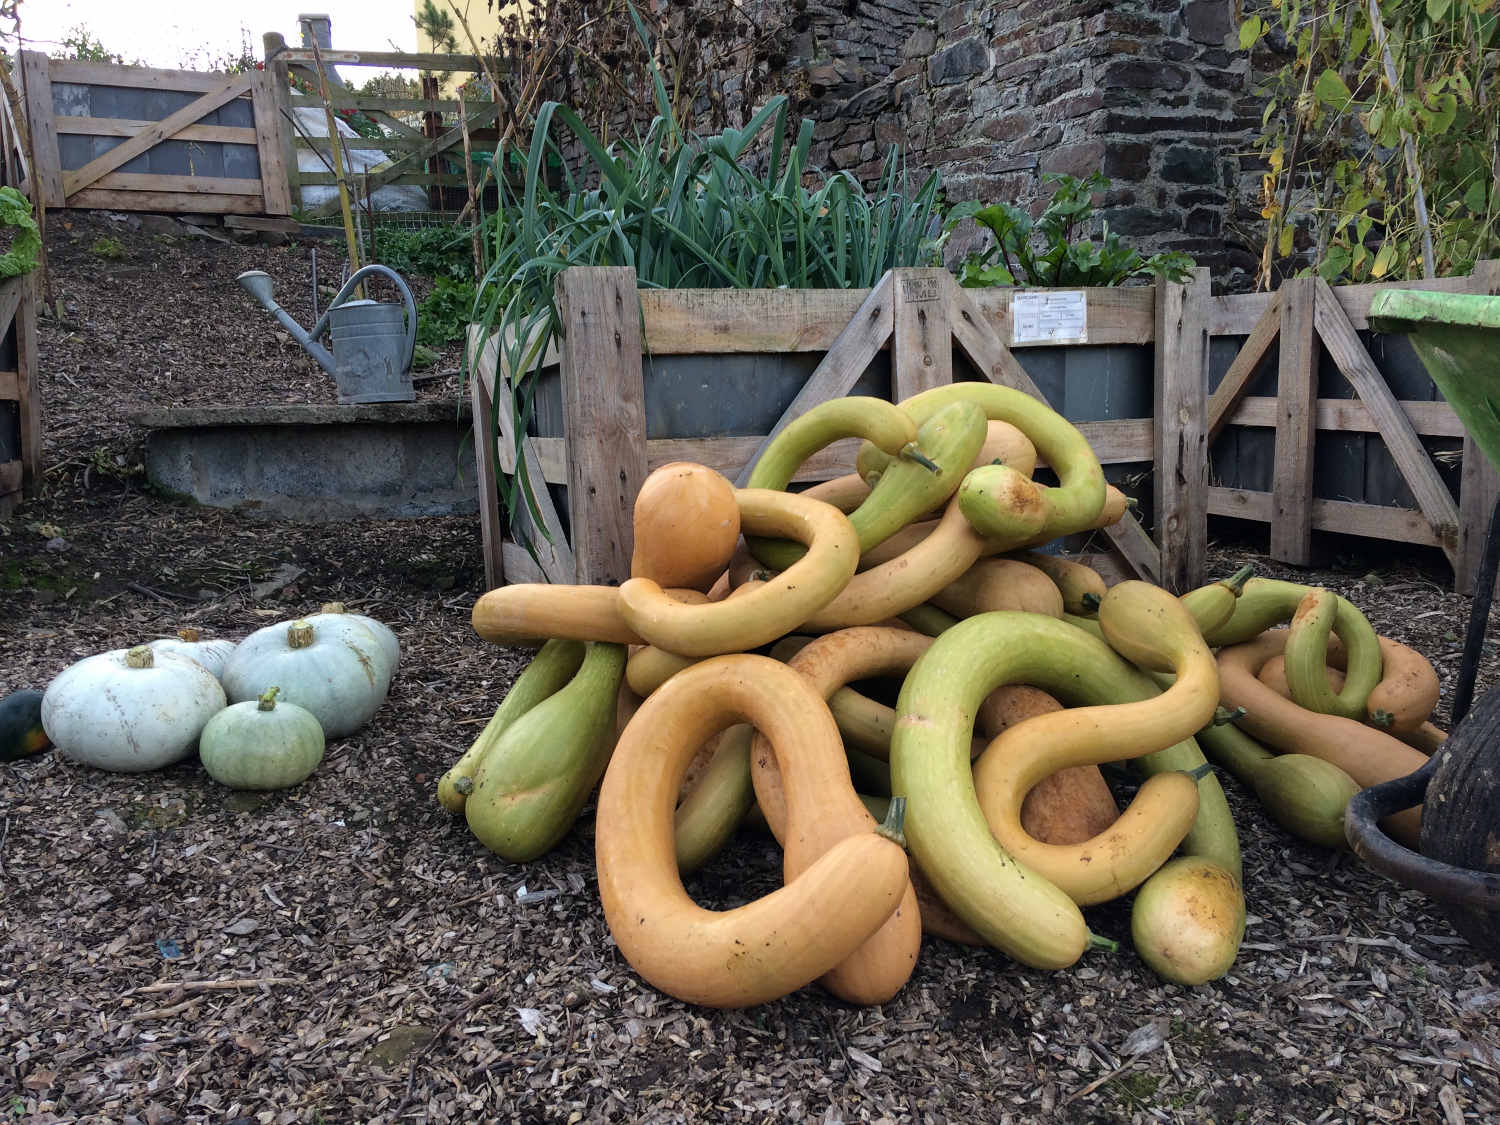 Image showing a large amount of fresh garden produce.